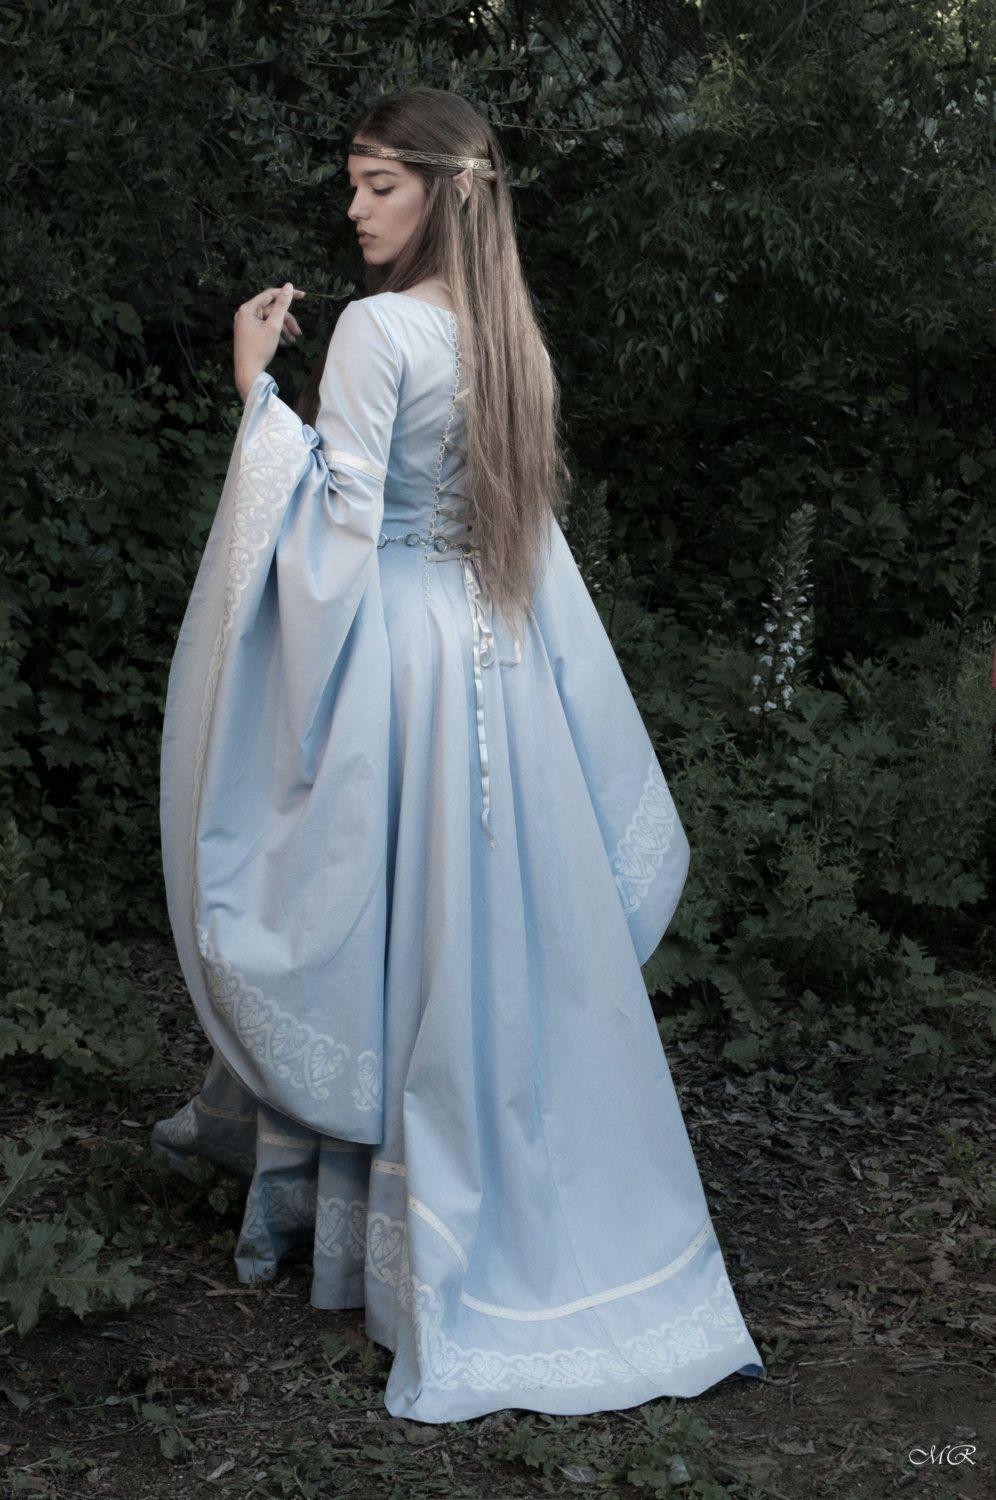 Elven fantasy medieval wedding dress, hand painted cotton